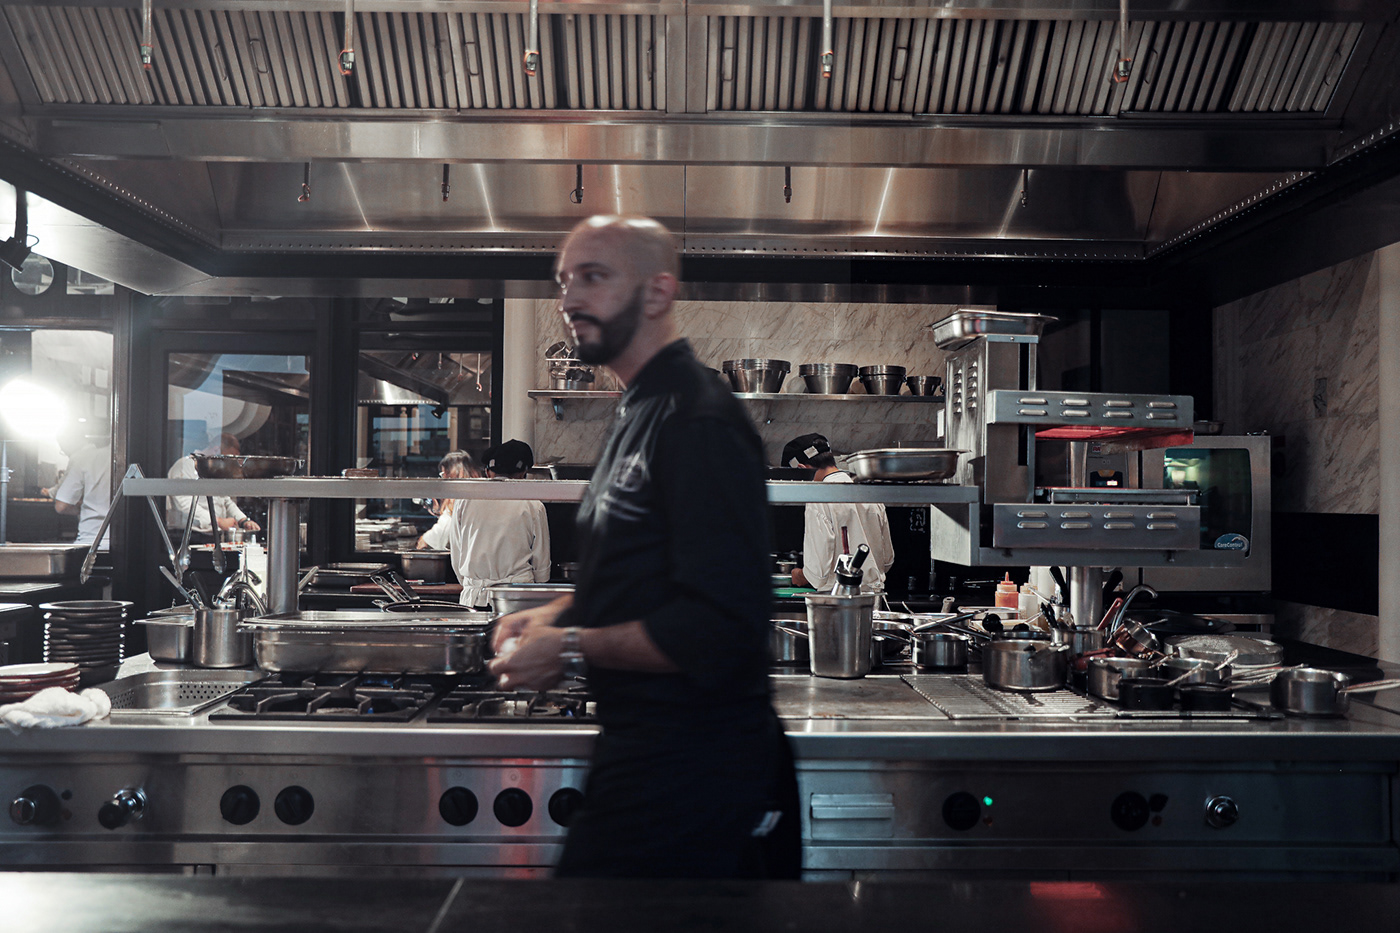 chef creative cuisine finedining French fusion lifestyle restaurant